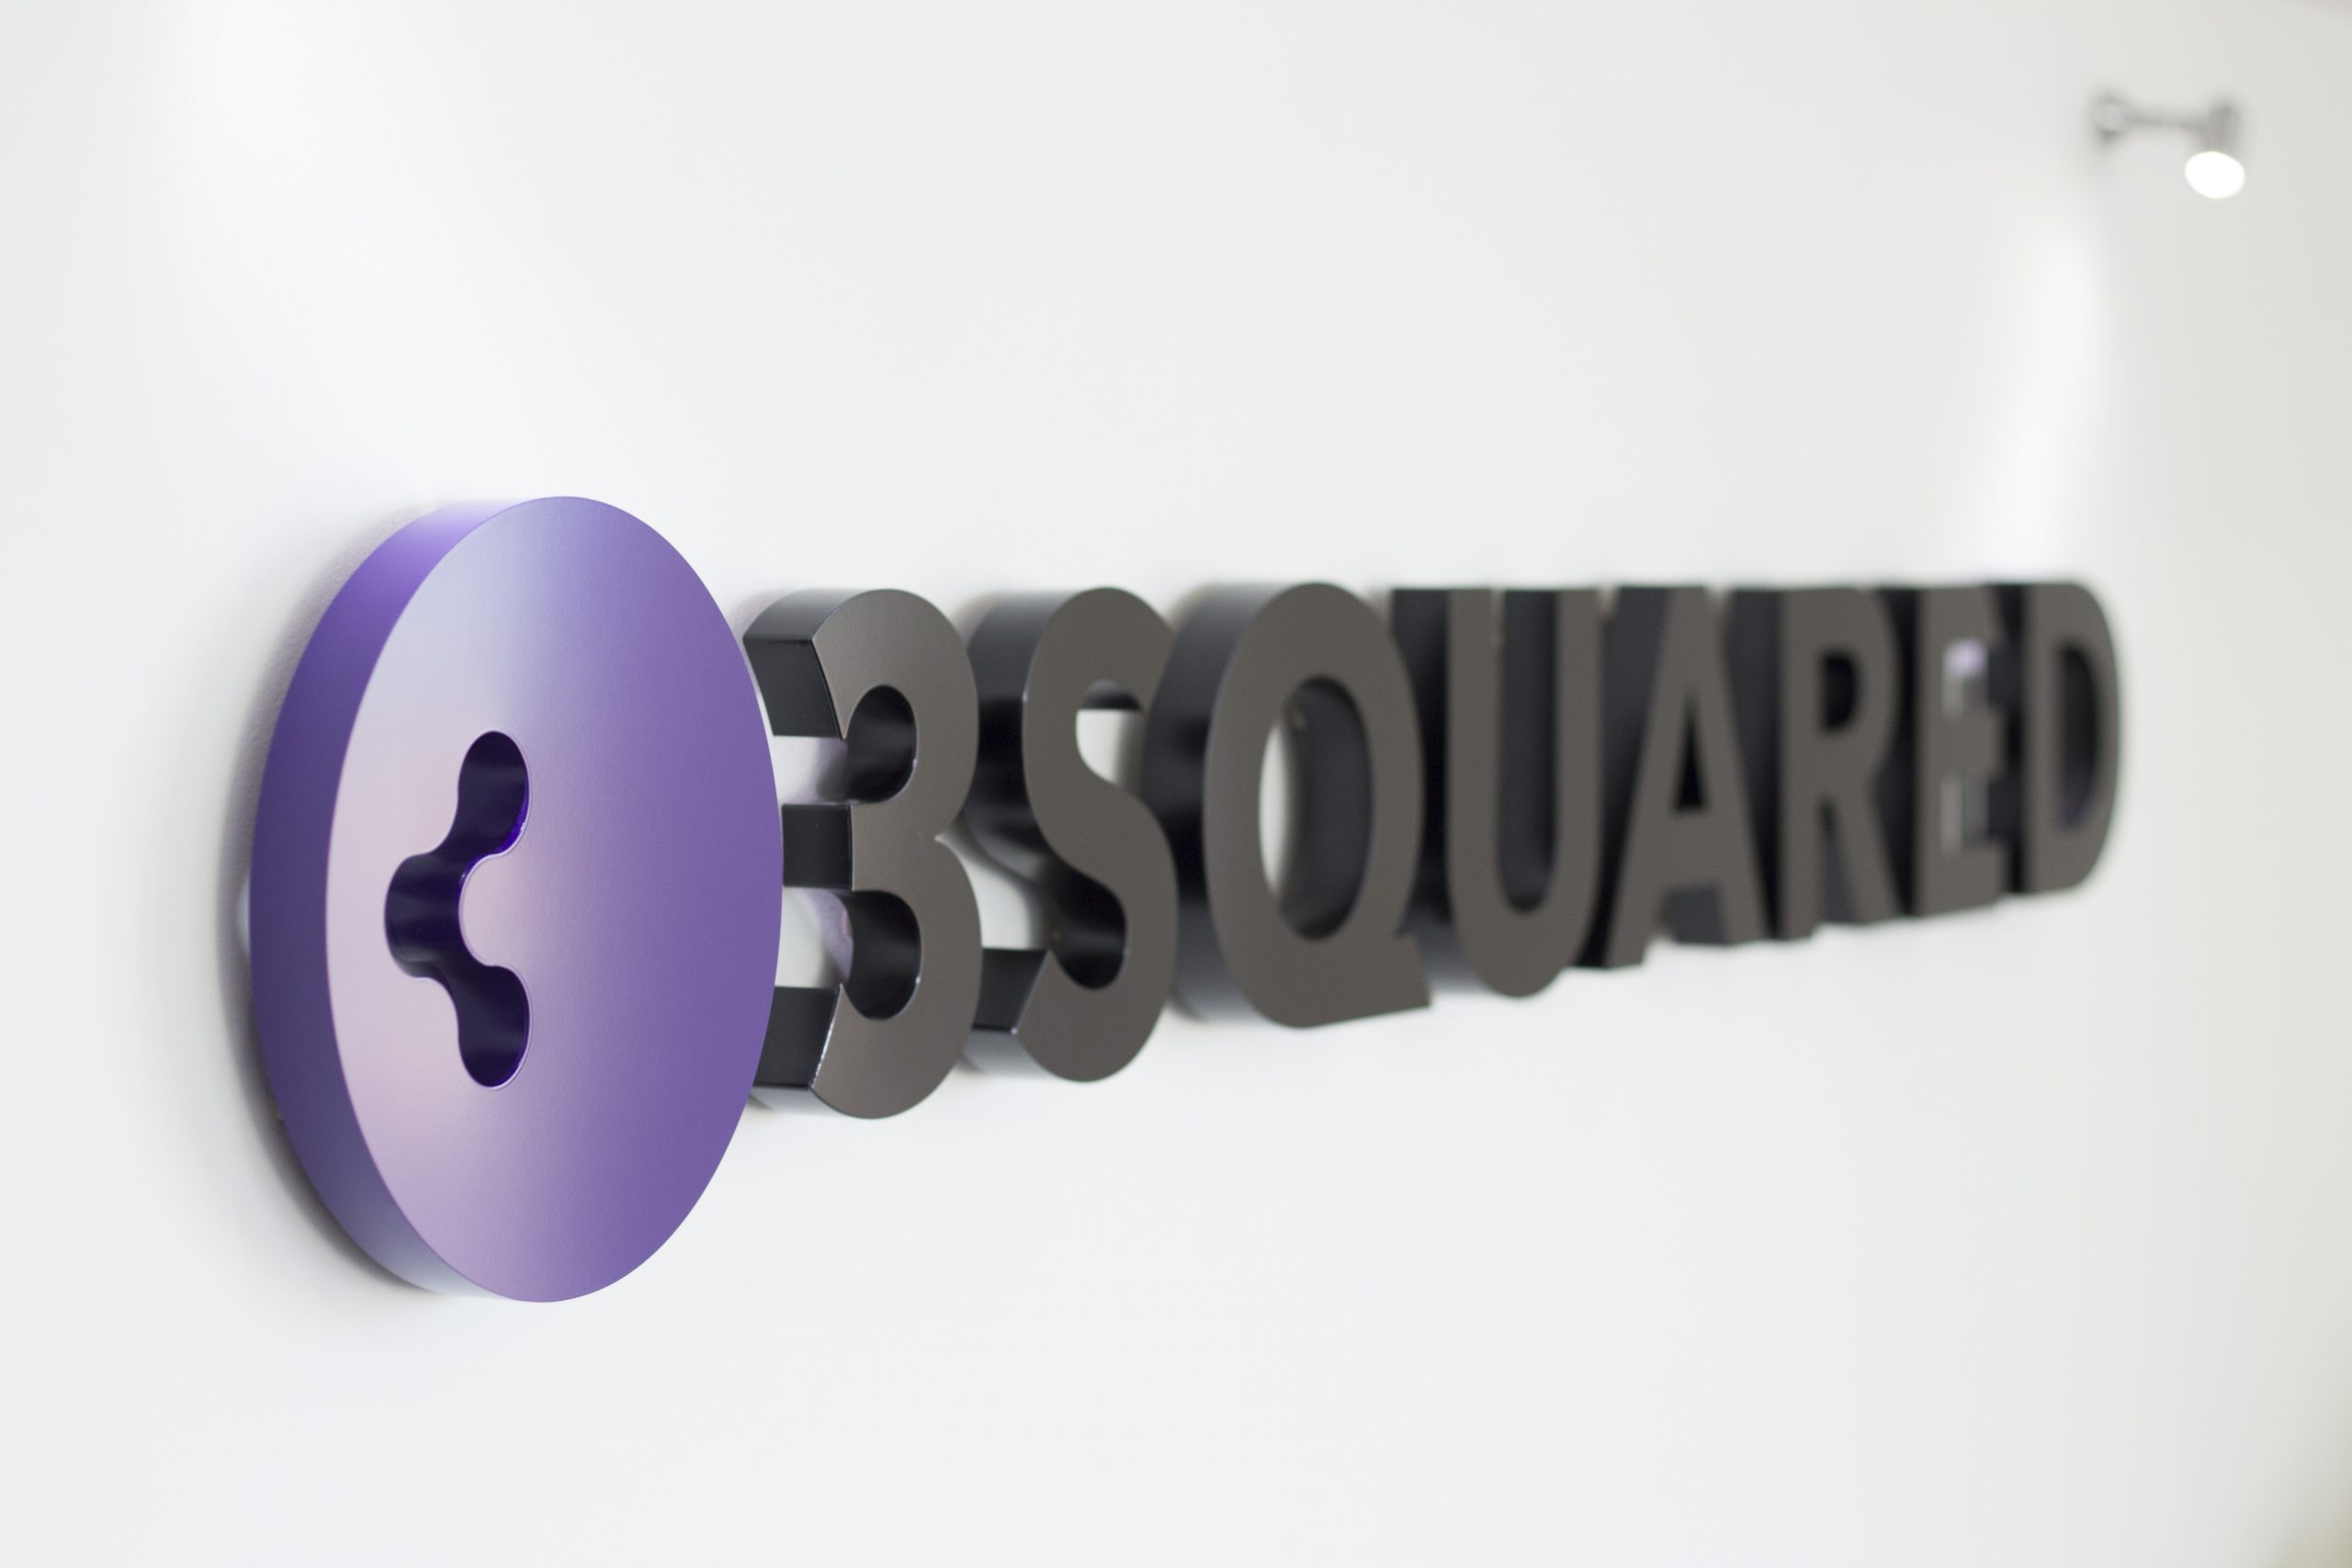 3Squared Logo in office